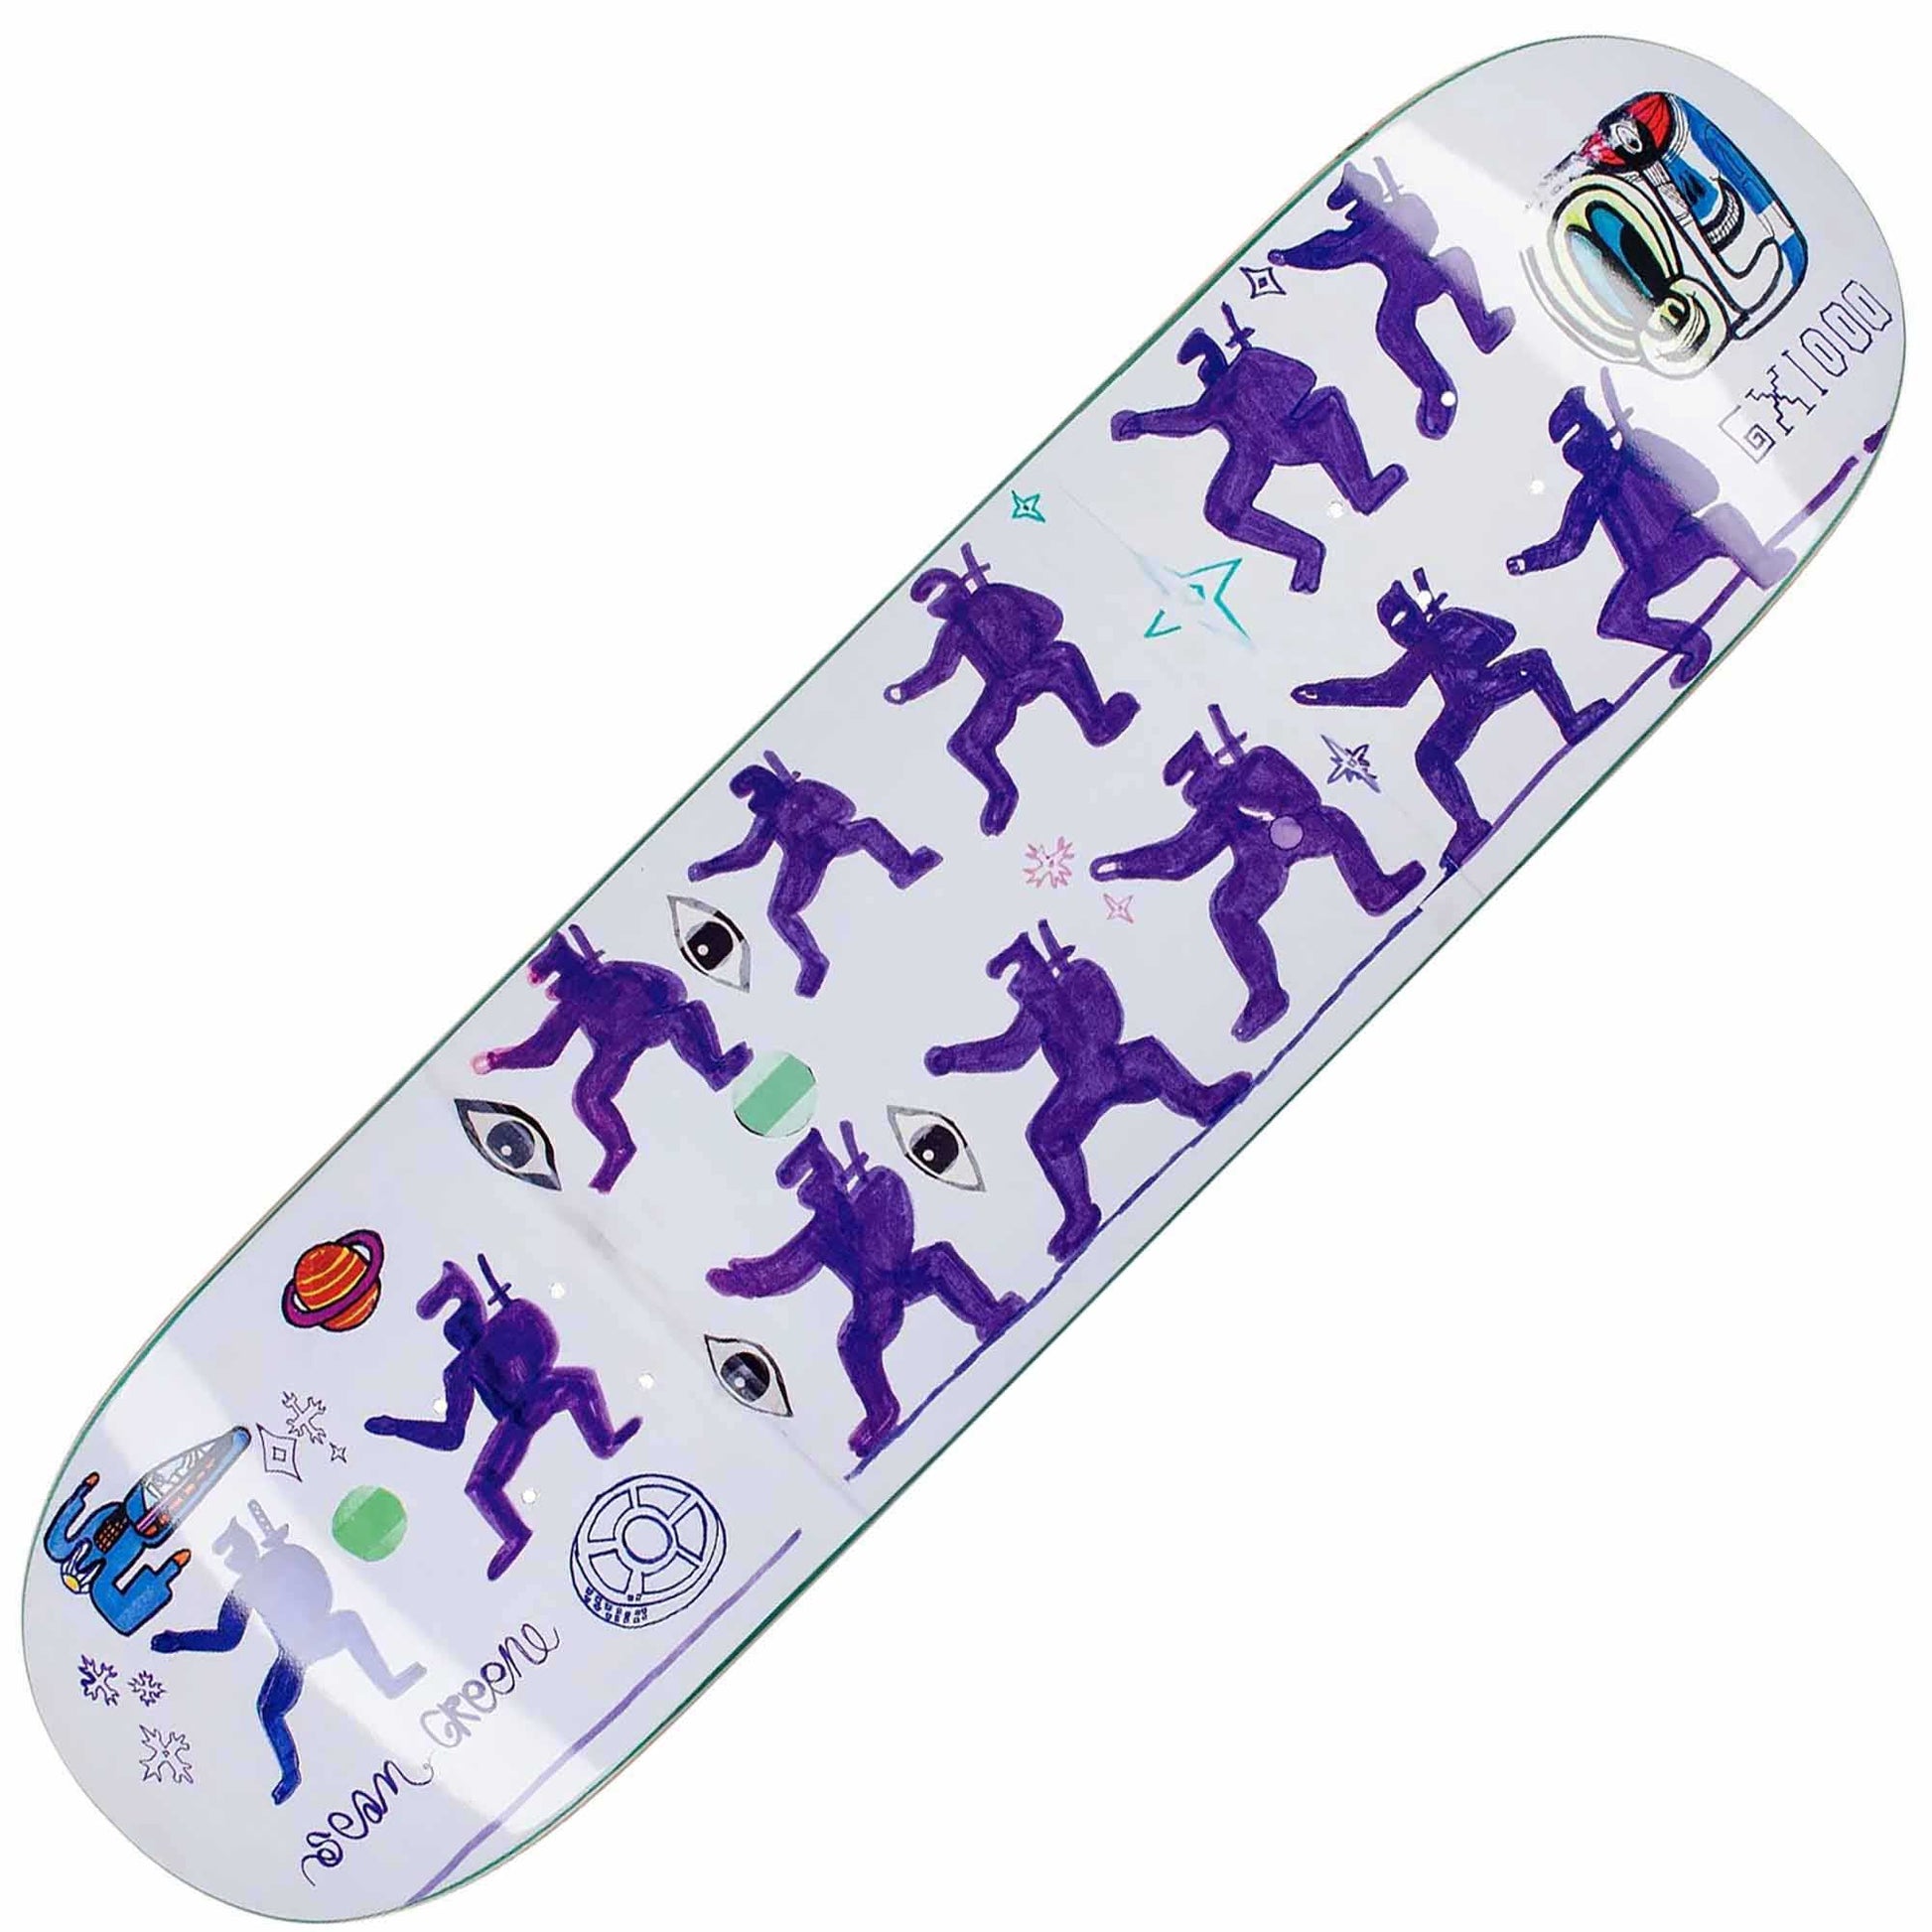 GX1000 Ninjas "Greene" Deck (8.375”) - Tiki Room Skateboards - 1